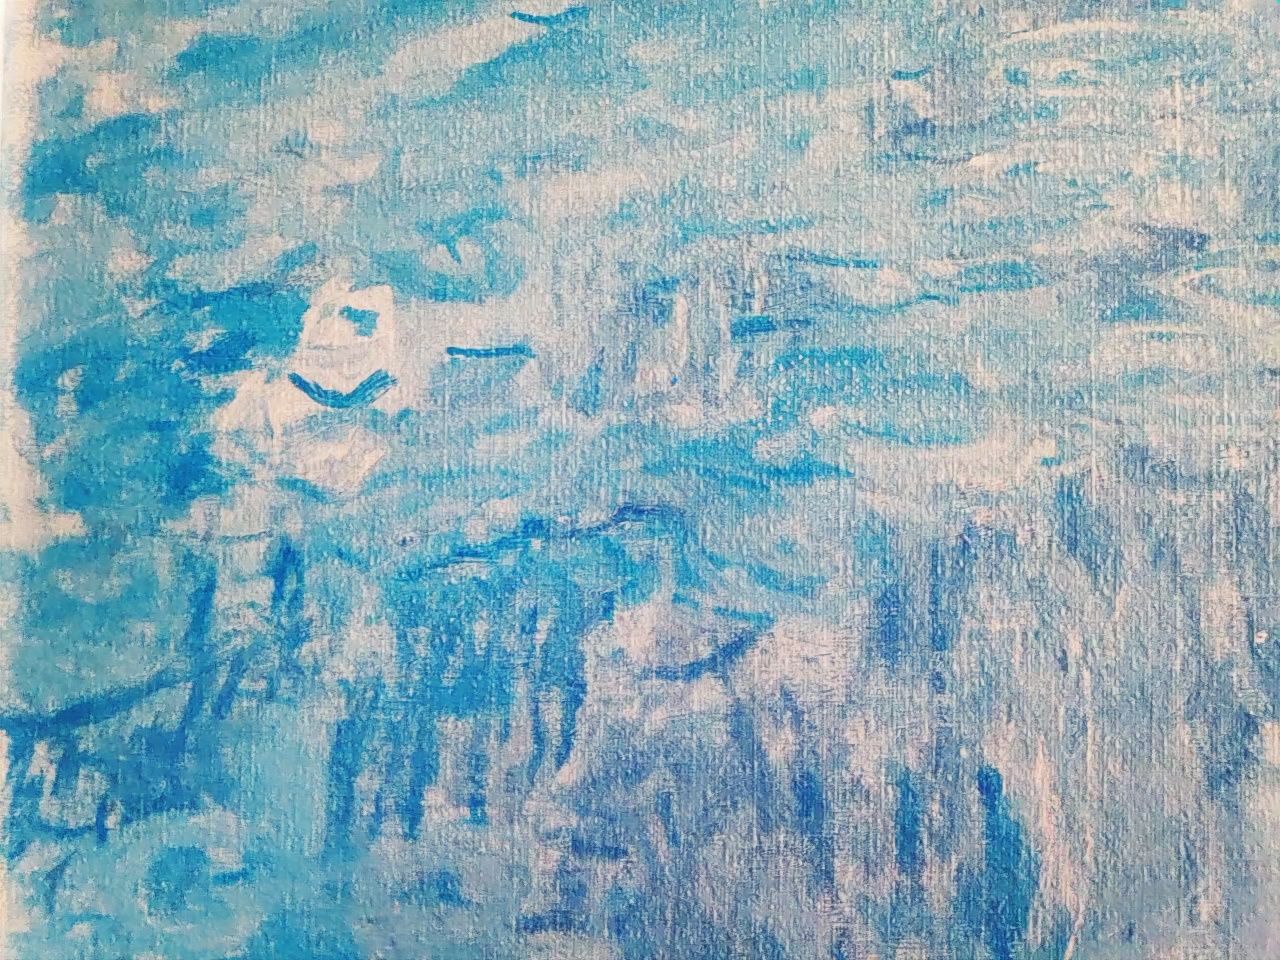 Cloud Monet reprodukcja obrazu